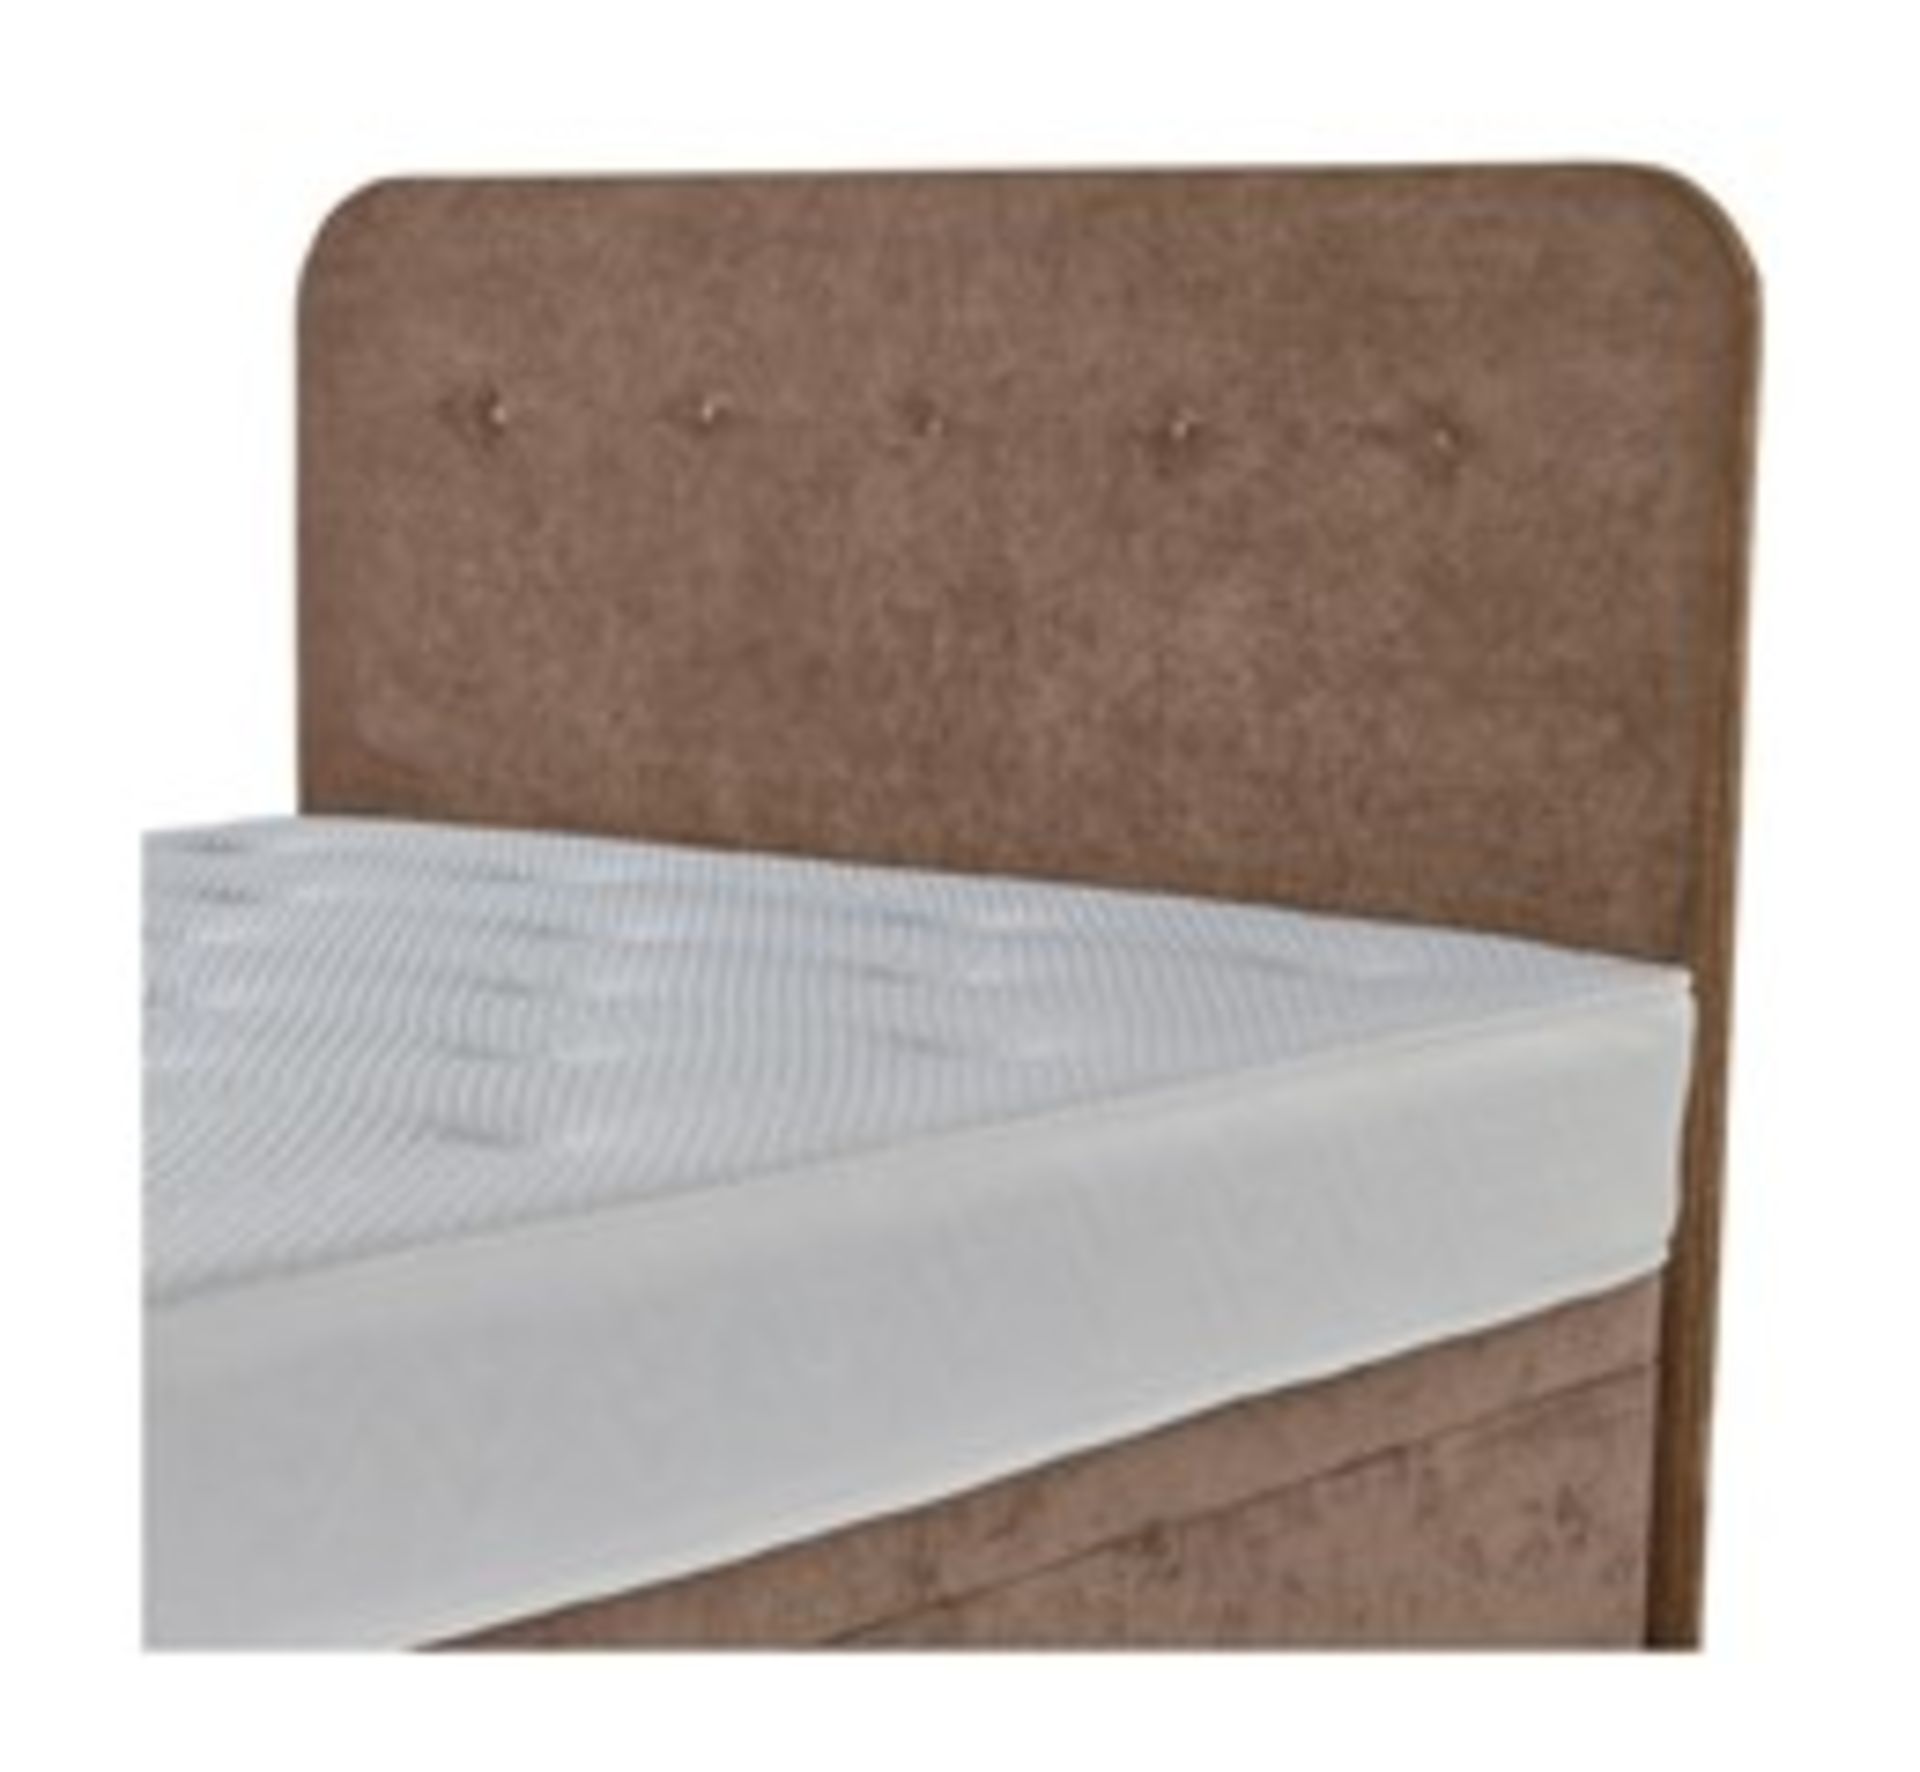 x1| Carpet Right Ex-Display 4ft 6 Sleepright Arizona Floor Standing Headboard Taupe |RRP £169|